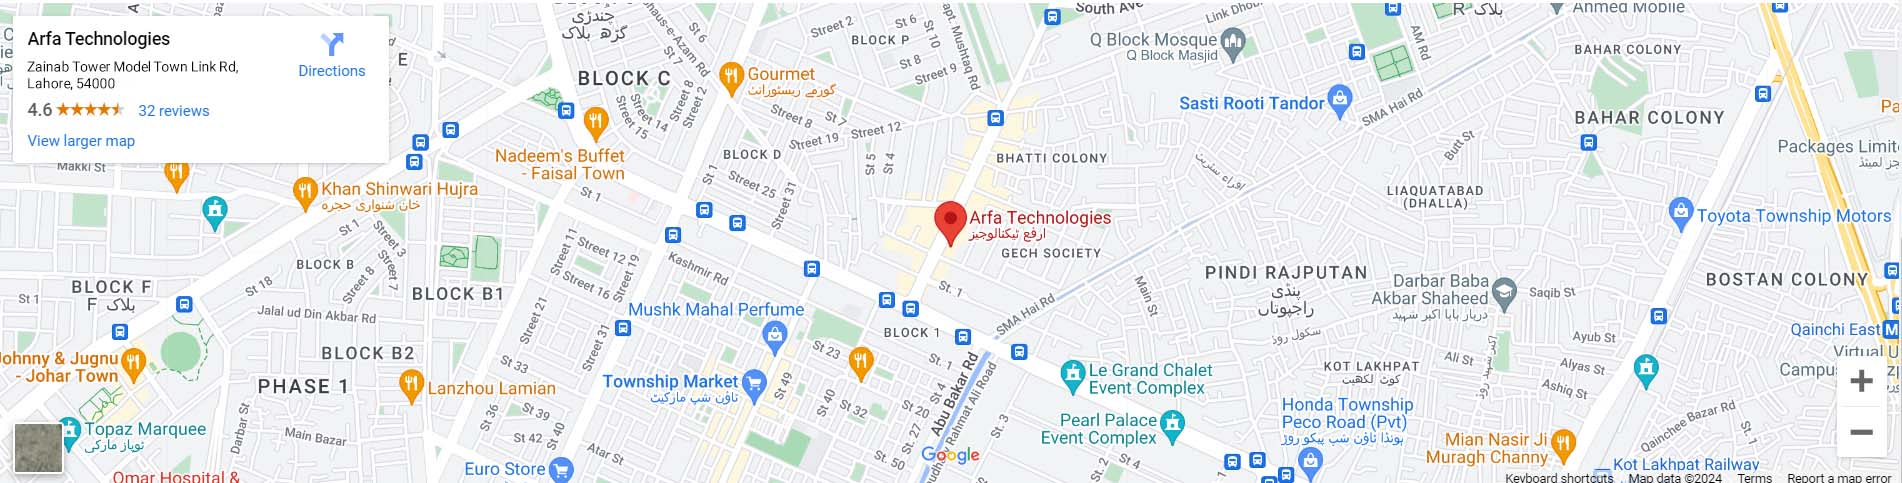 Arfa Technologies Google Map Location